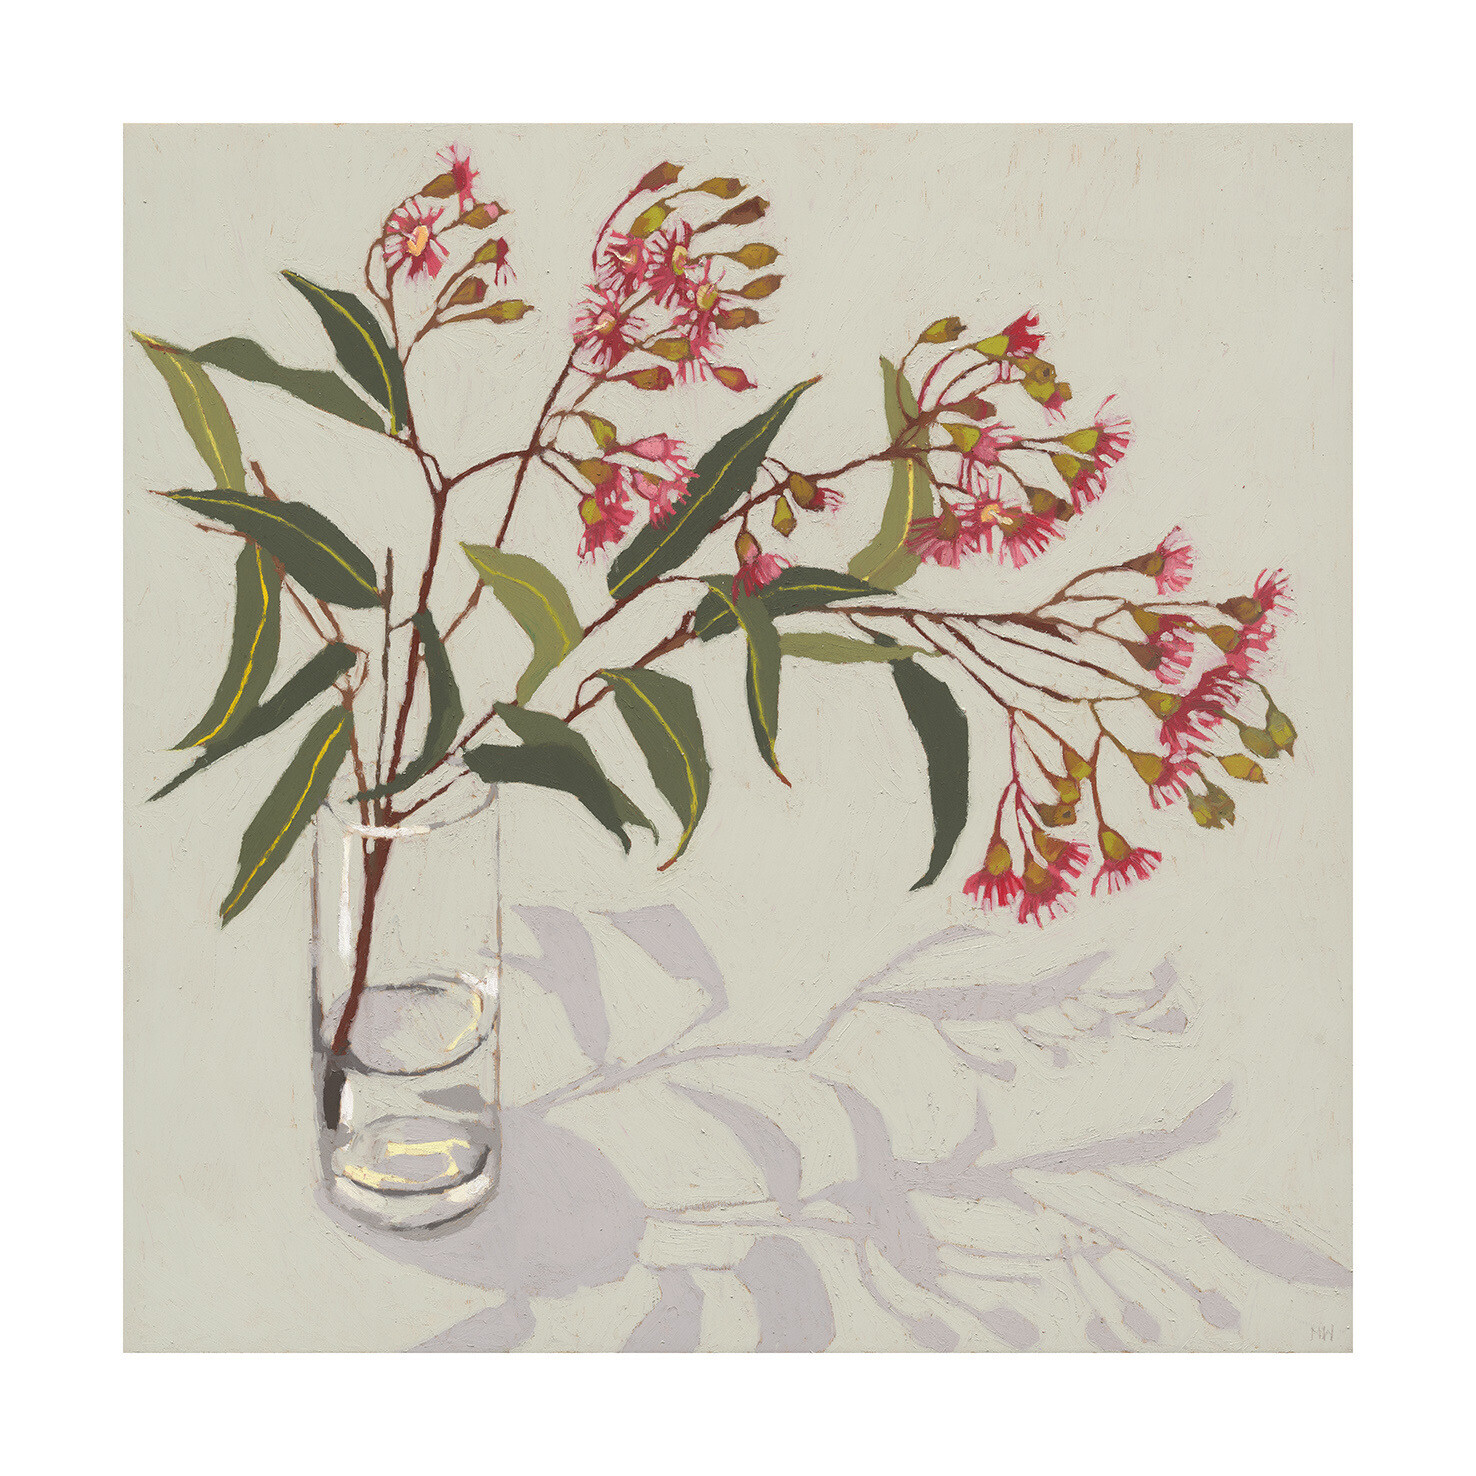 Limited Edition Fine Art Print “Flowering Gum” 60x60cm STRETCHED CANVAS